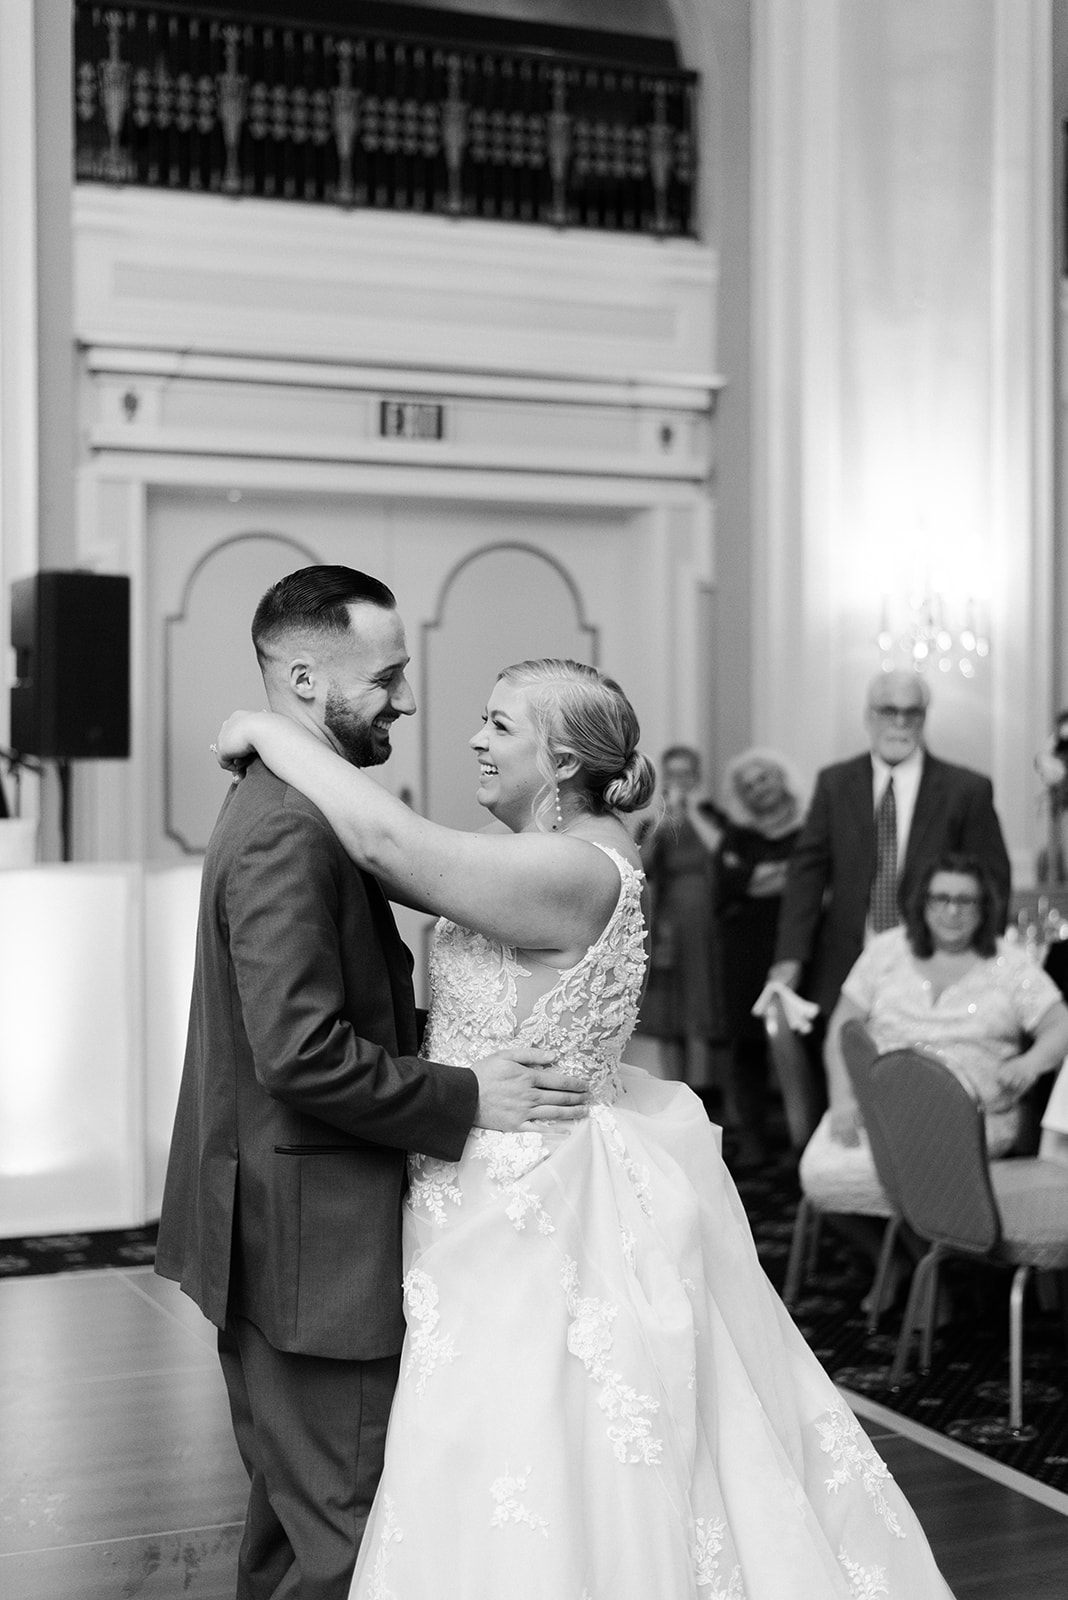 Pennsylvania wedding photographer captures bride and groom first dance